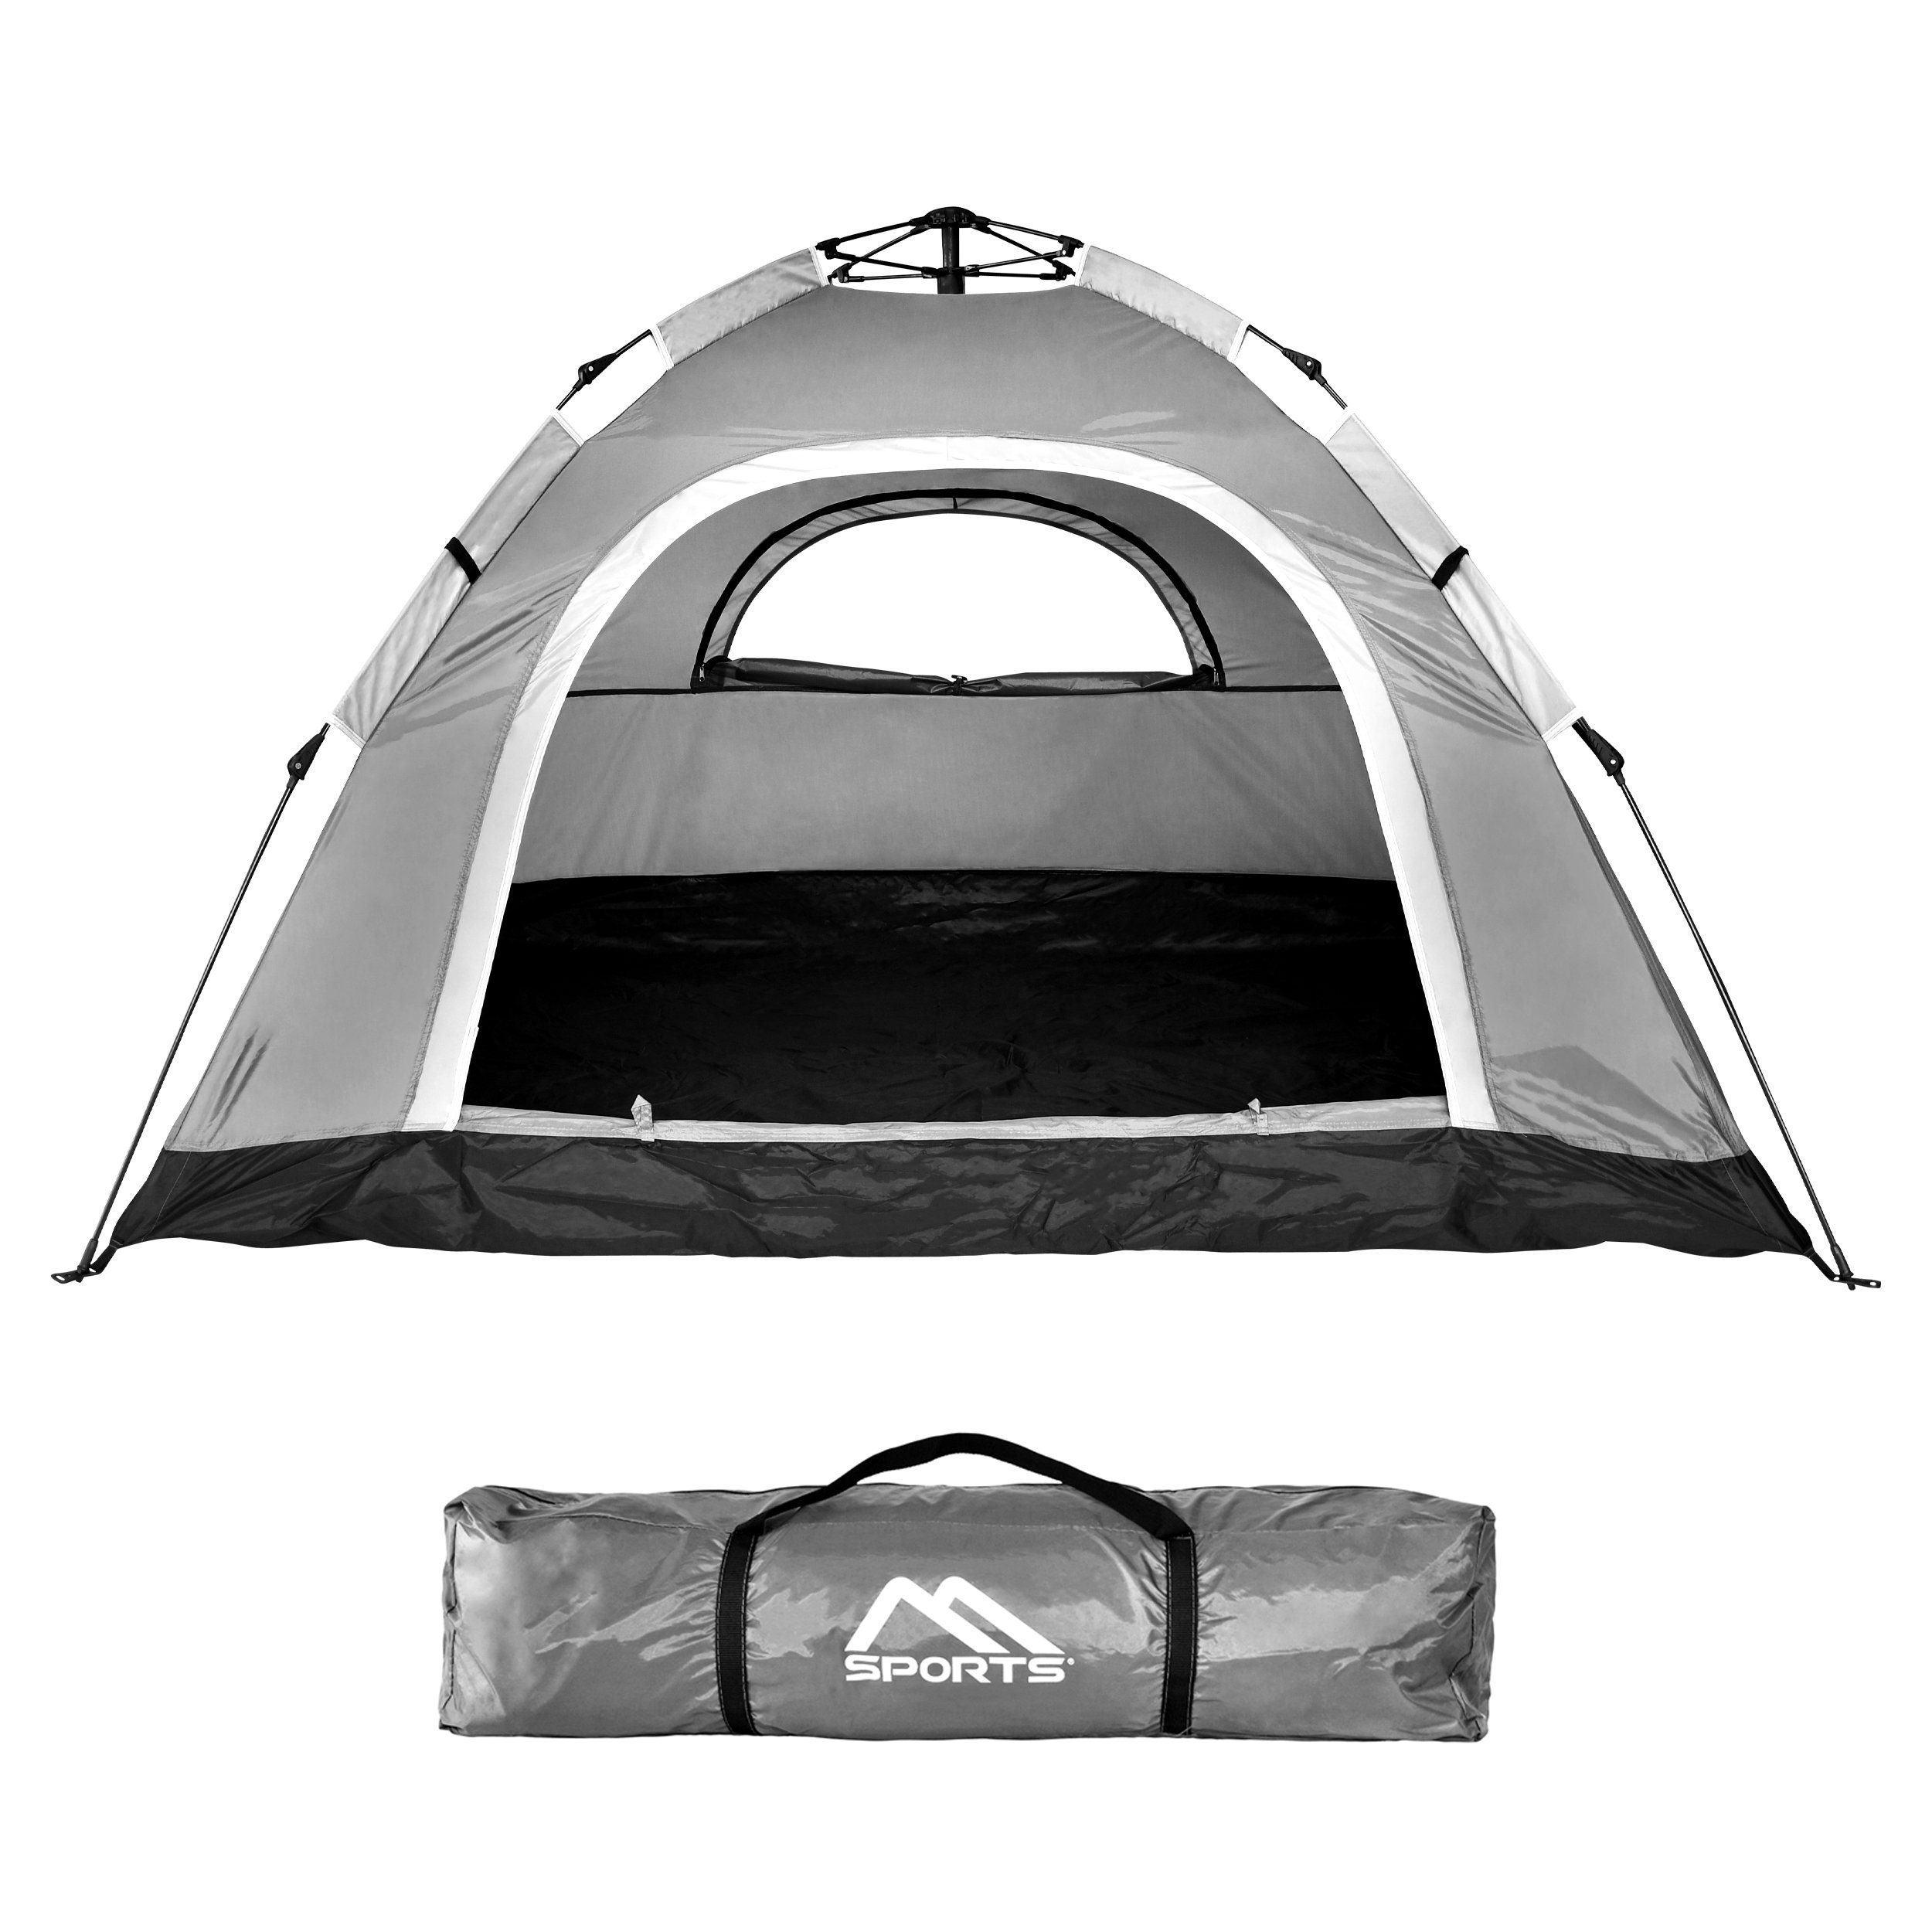 MSports® Winddicht Zelt Up Campingzelt Pop Kuppelzelt Würfelzelt Wasserdicht Grau 2-3 Igluzelt Personen Zelt